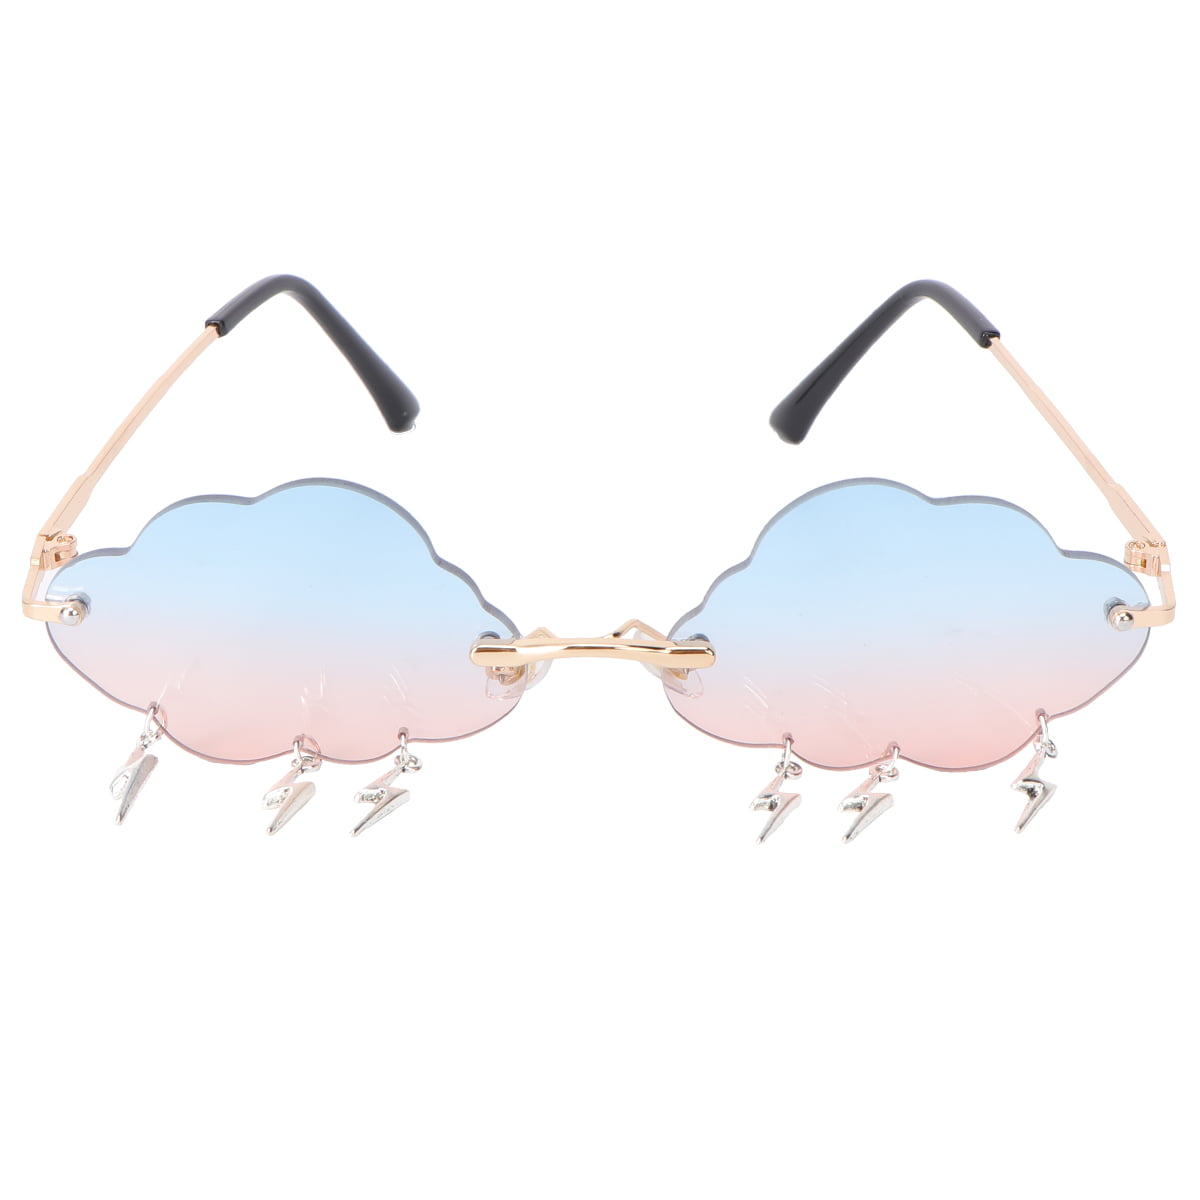 Rosarivae 1 Pair Party Cloud Glasses Creative Cloud Sunglasses Stylish ...